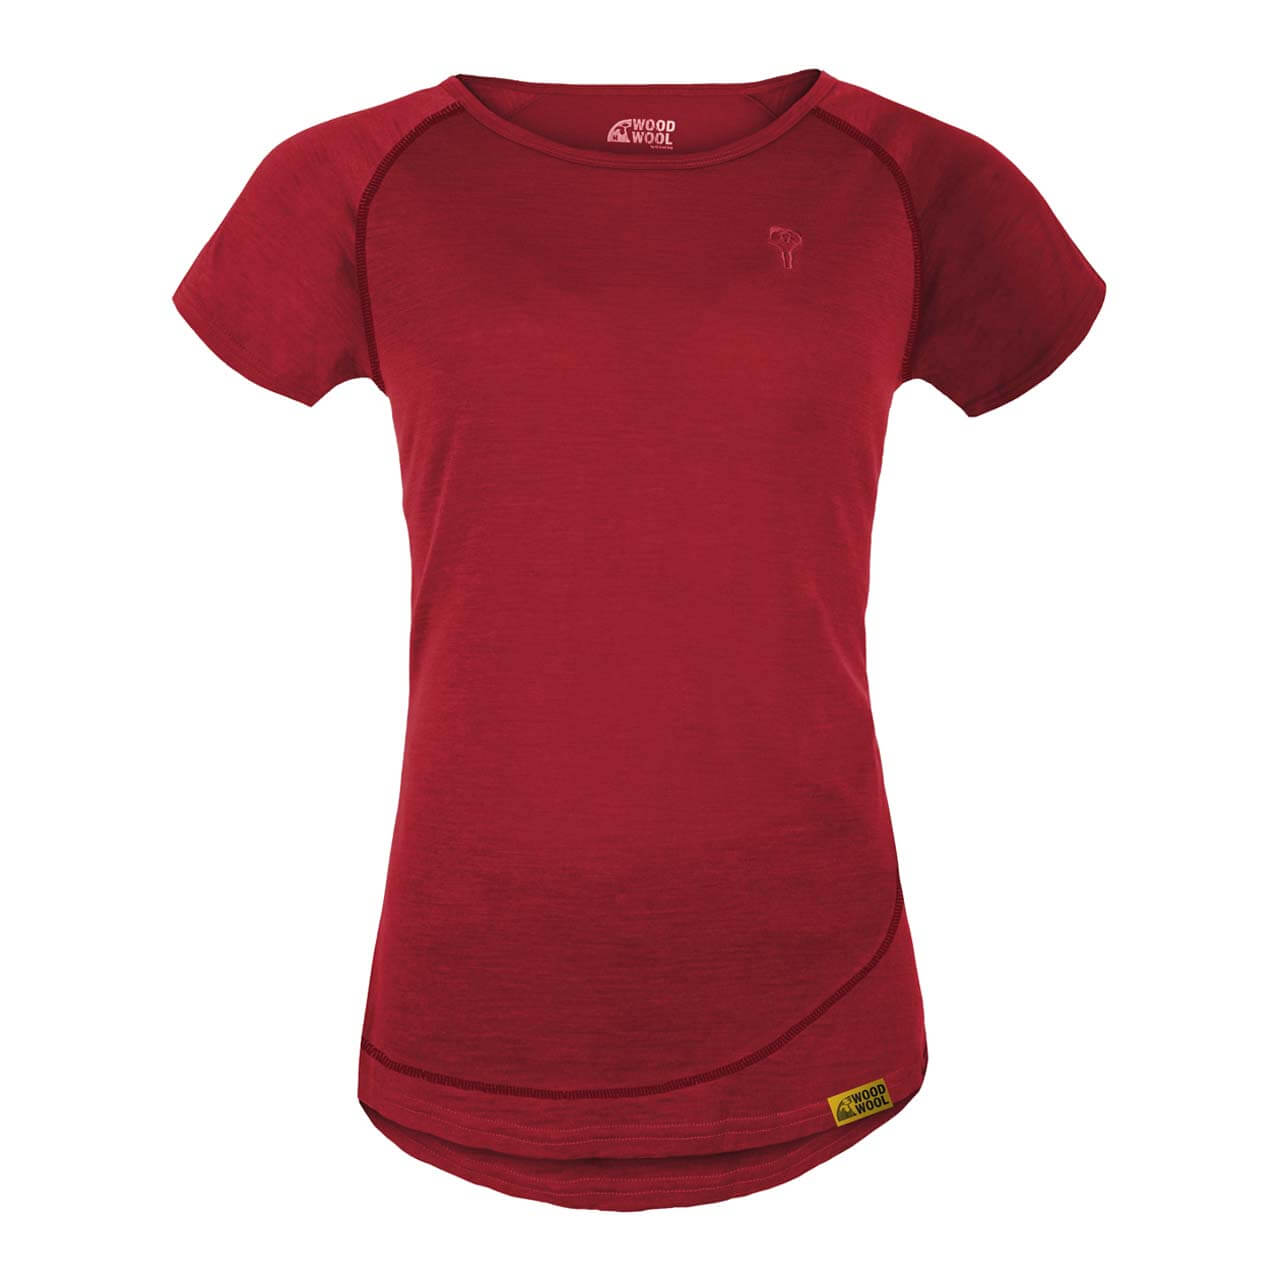 Grüezi Bag WoodWool T-Shirt Lady Burnham - Fired Red Brick, L von Grüezi Bag